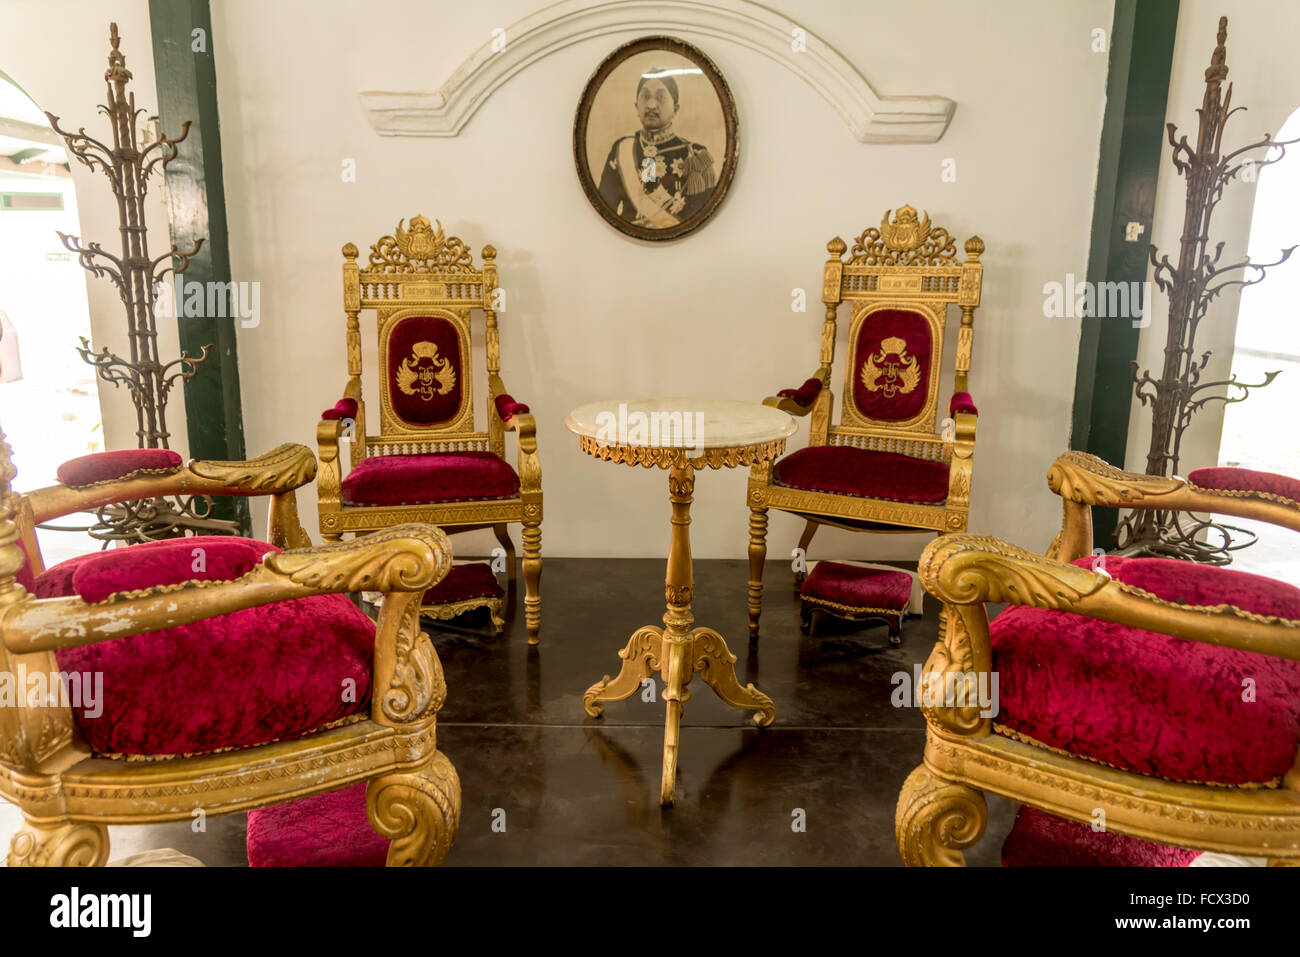 historic furniture  at the Sultan's Palace museum / Kraton, Yogyakarta, Java, Indonesia, Asia Stock Photo